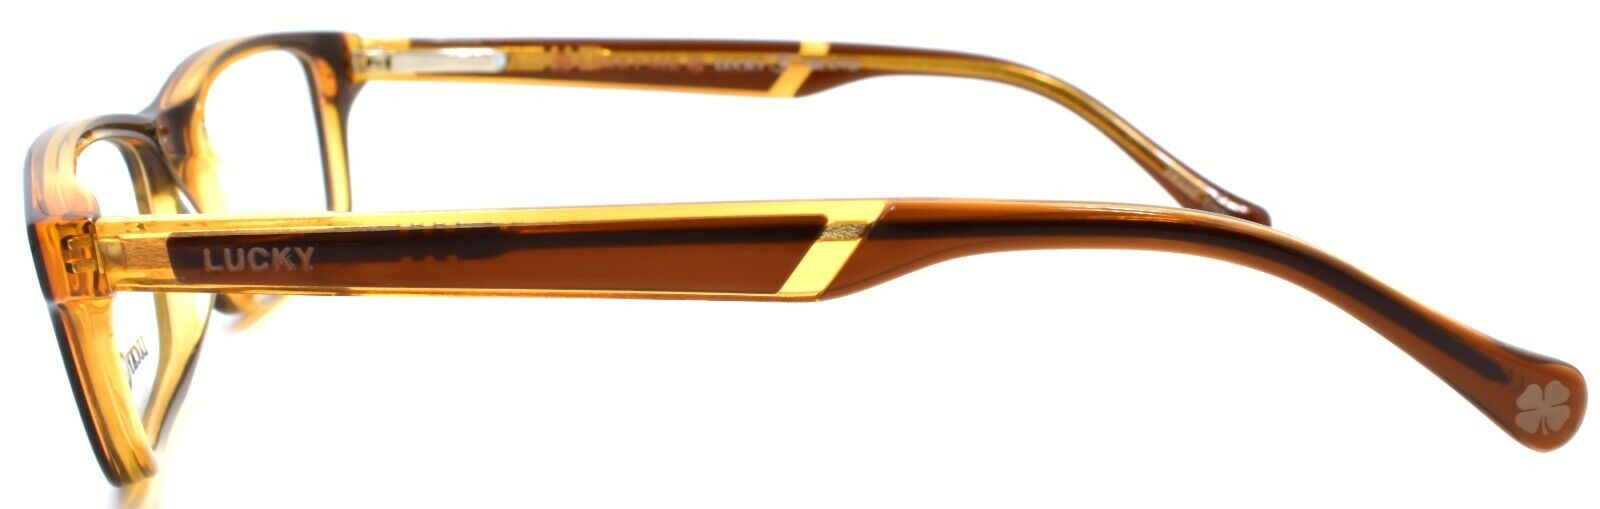 3-LUCKY BRAND Double Stitch Kids Eyeglasses Frames 46-17-125 Brown-751286228038-IKSpecs